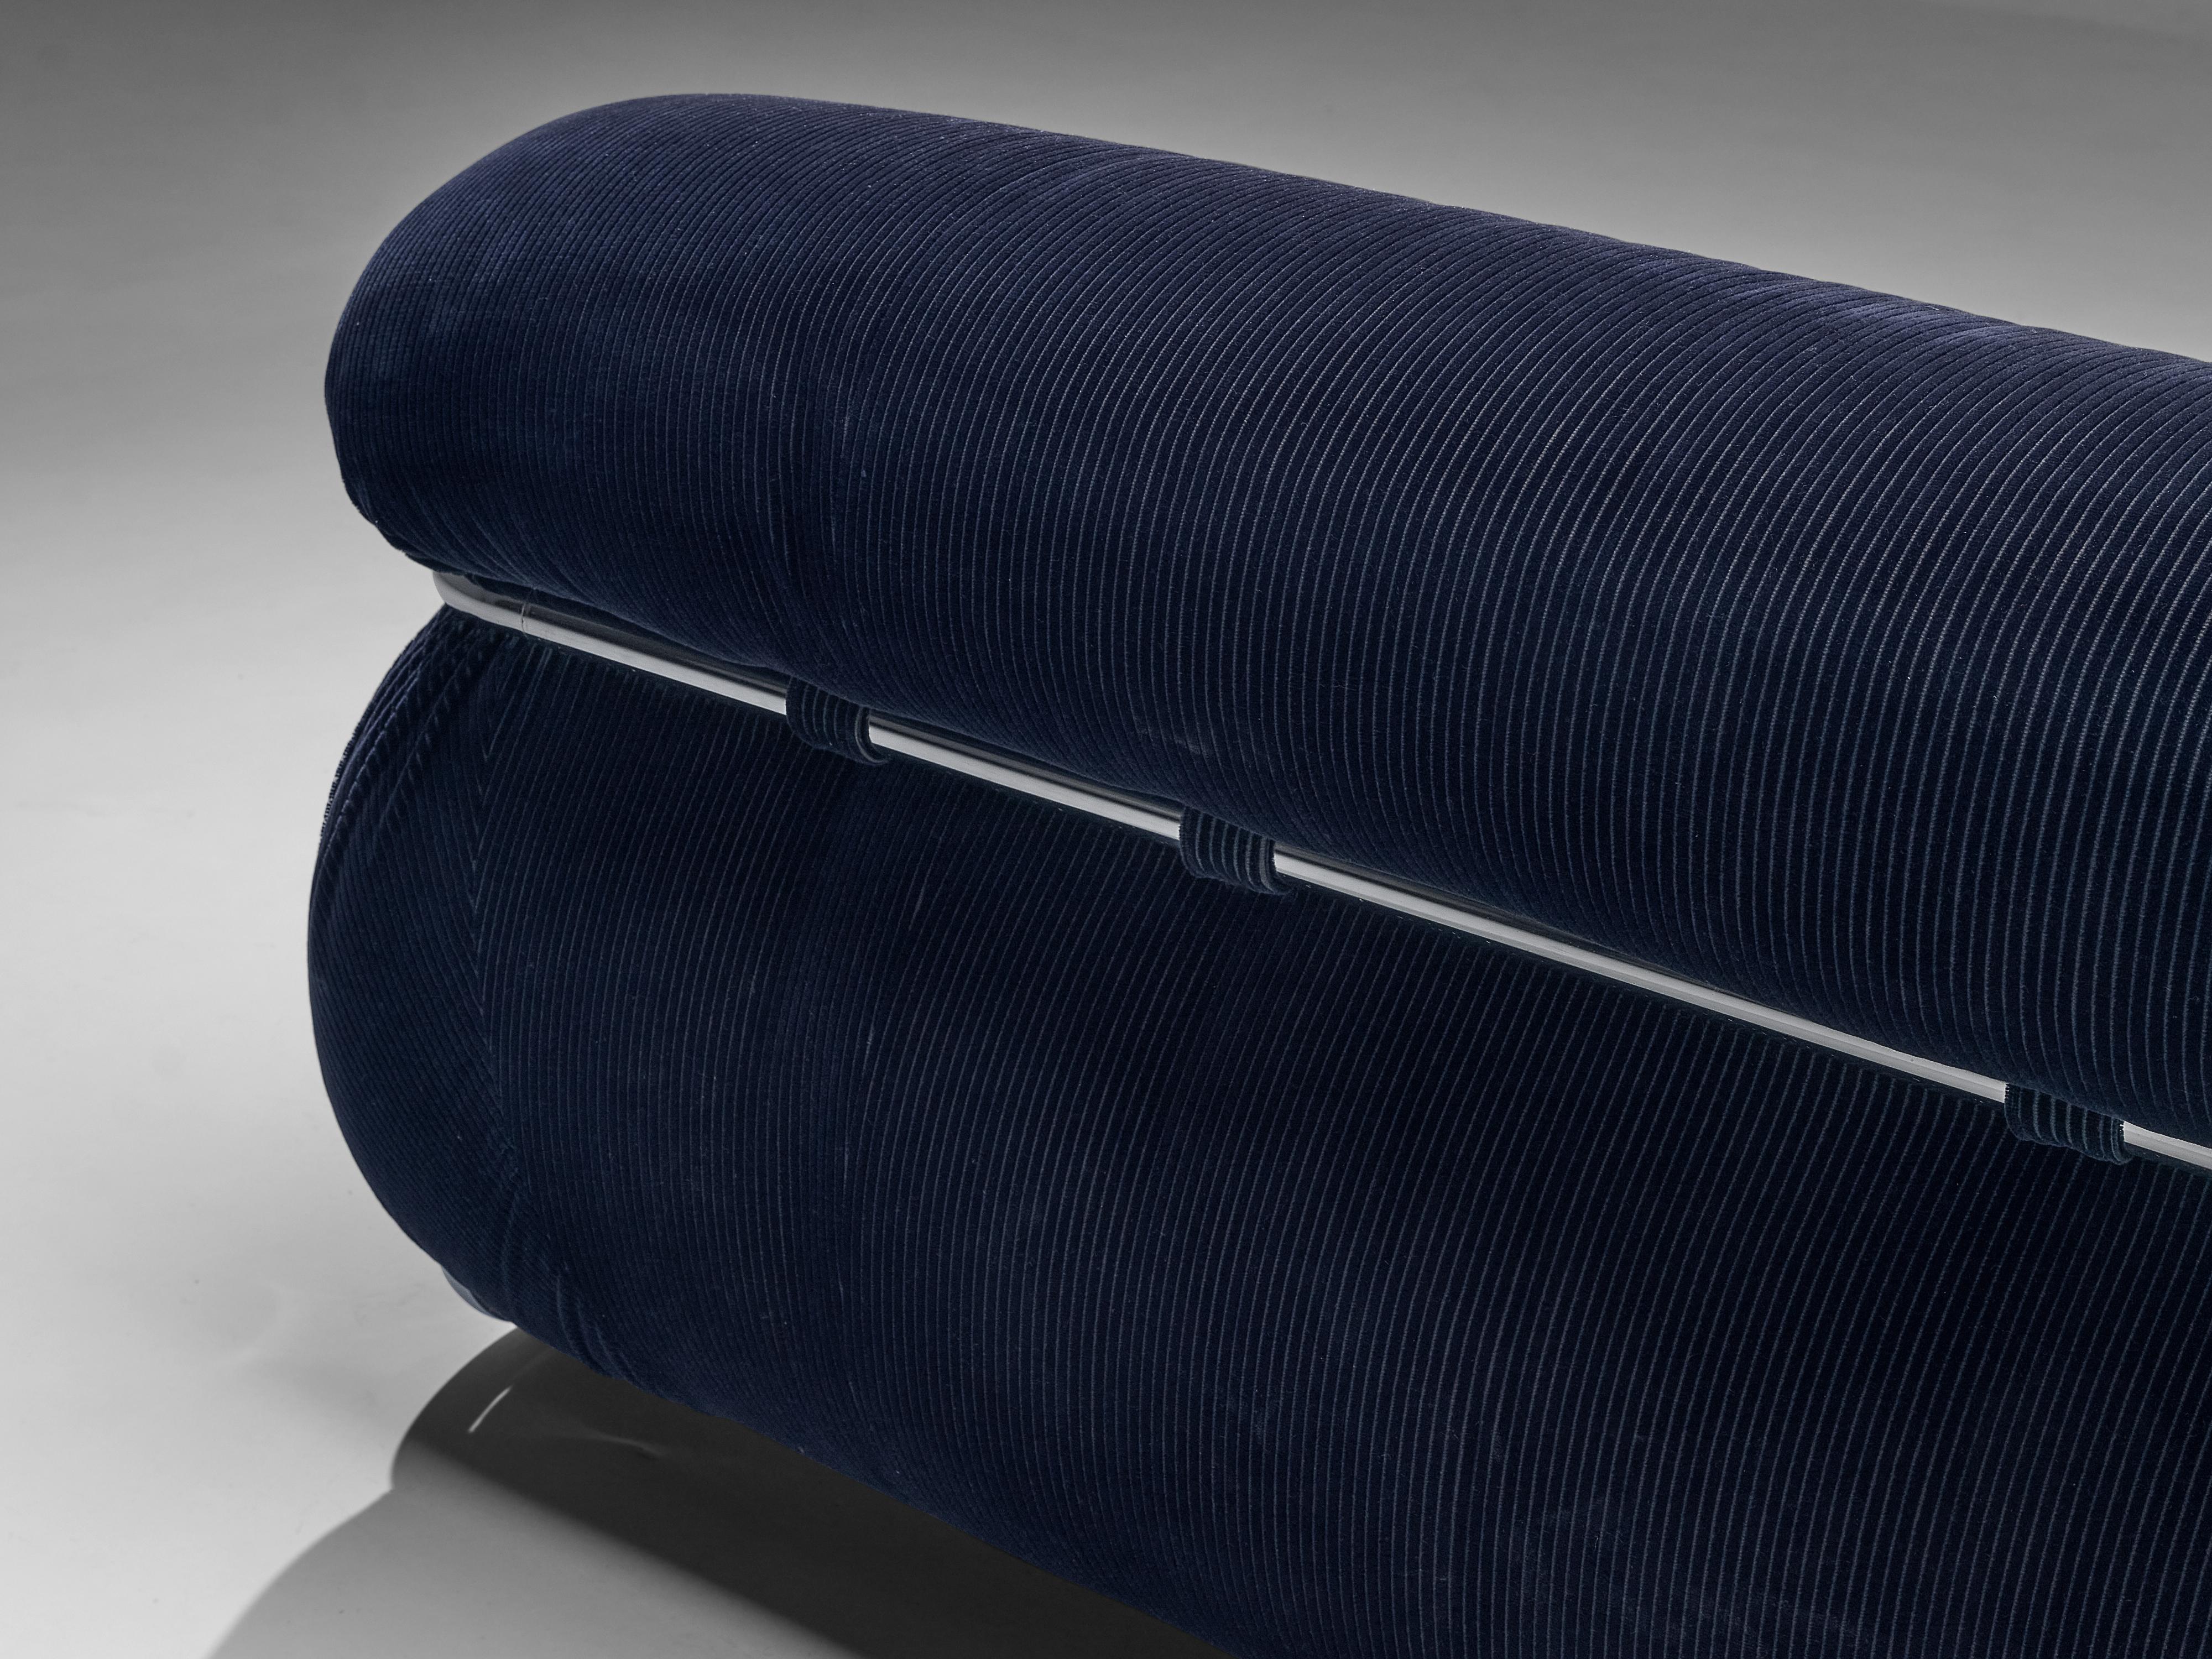 Late 20th Century Italian Sofa with Tubular Chrome Frame in Dark Blue Corduroy Upholstery